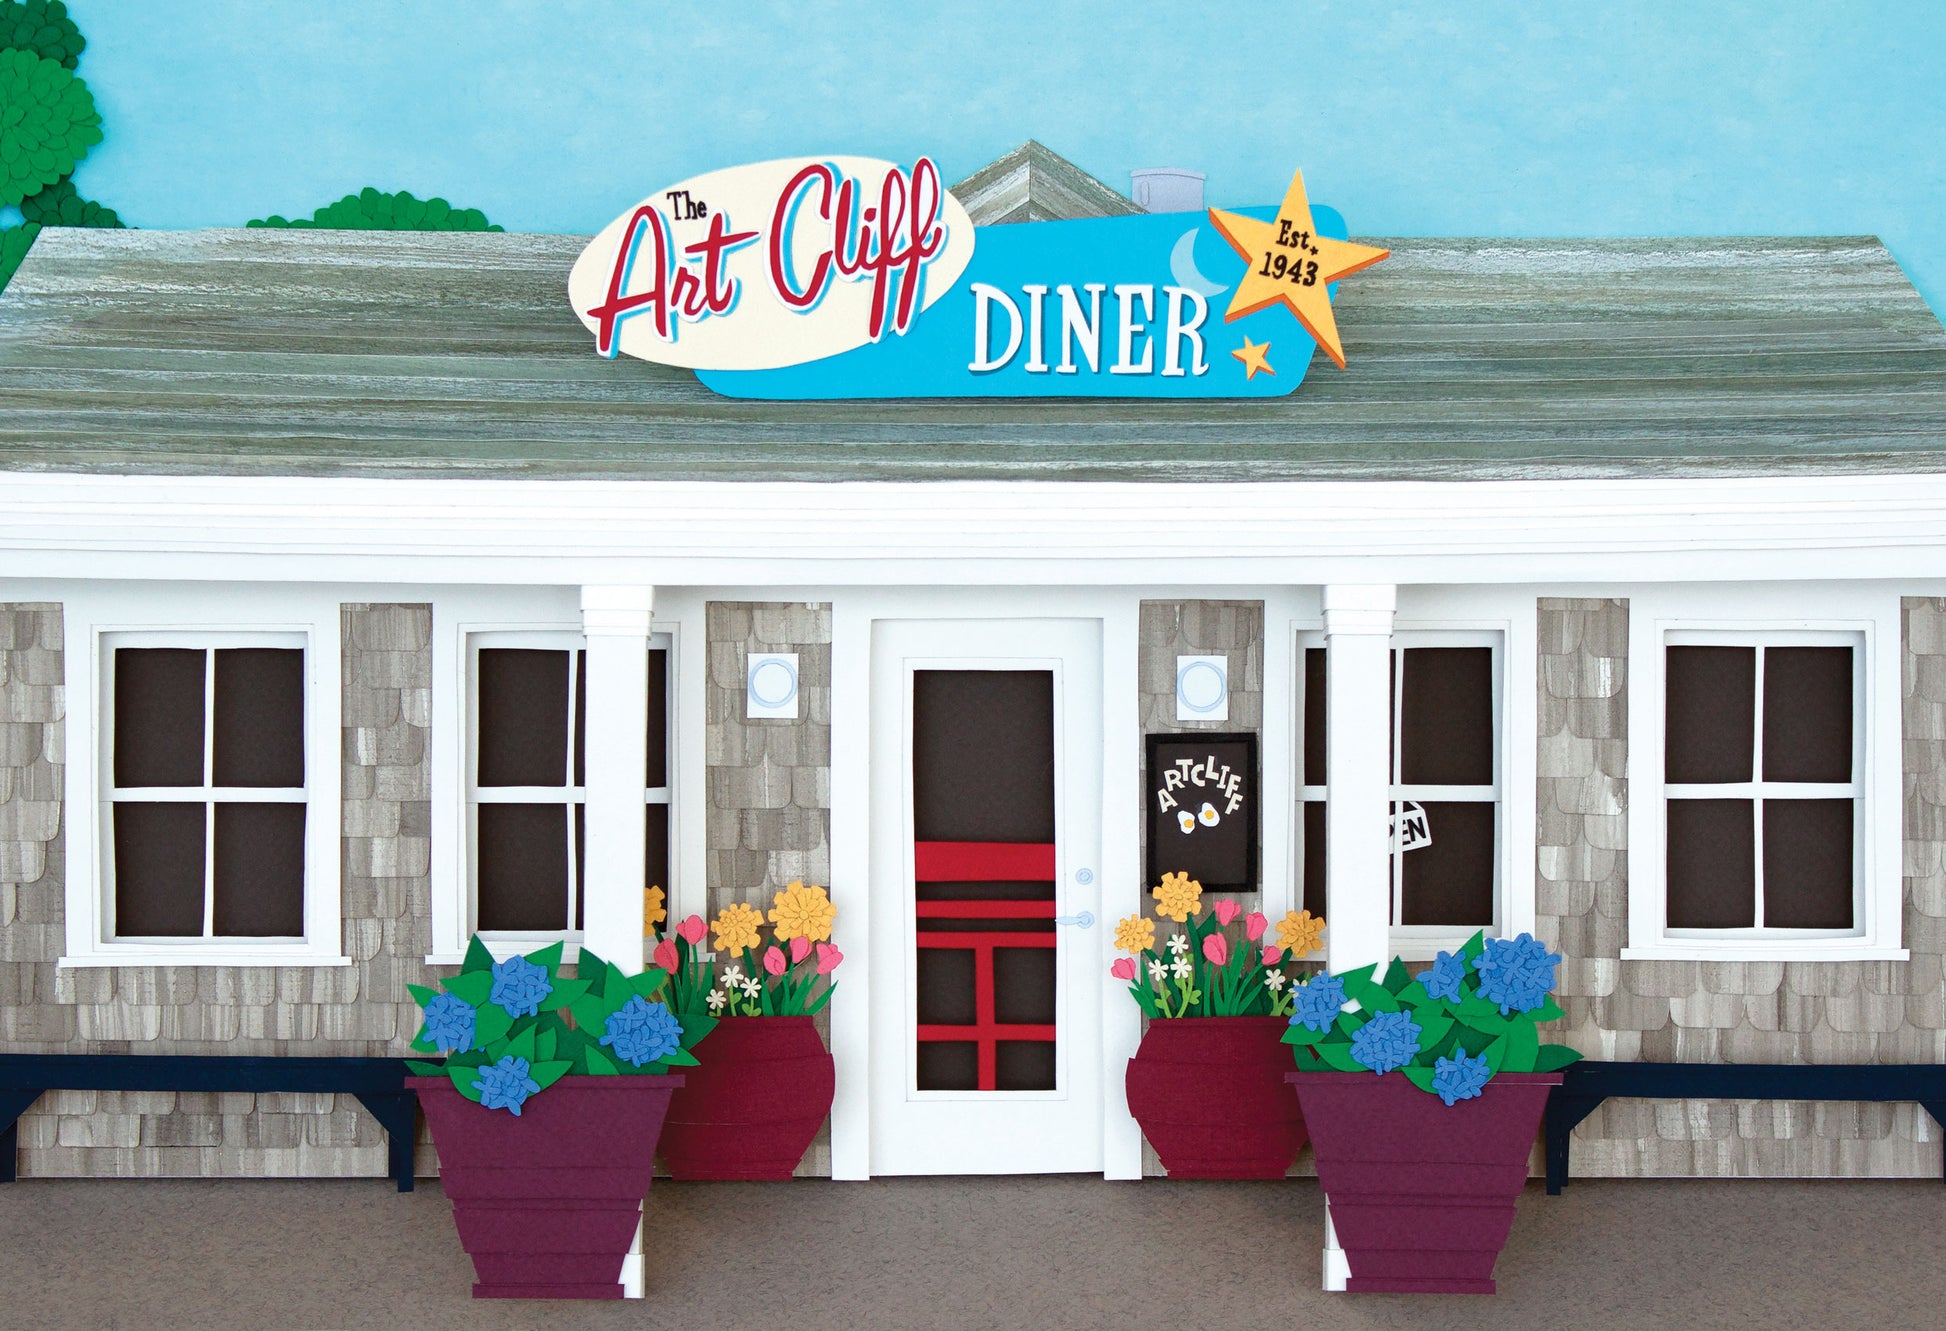 Archival print of cut paper illustration on the ArtCliff Diner on Martha's Vineyard